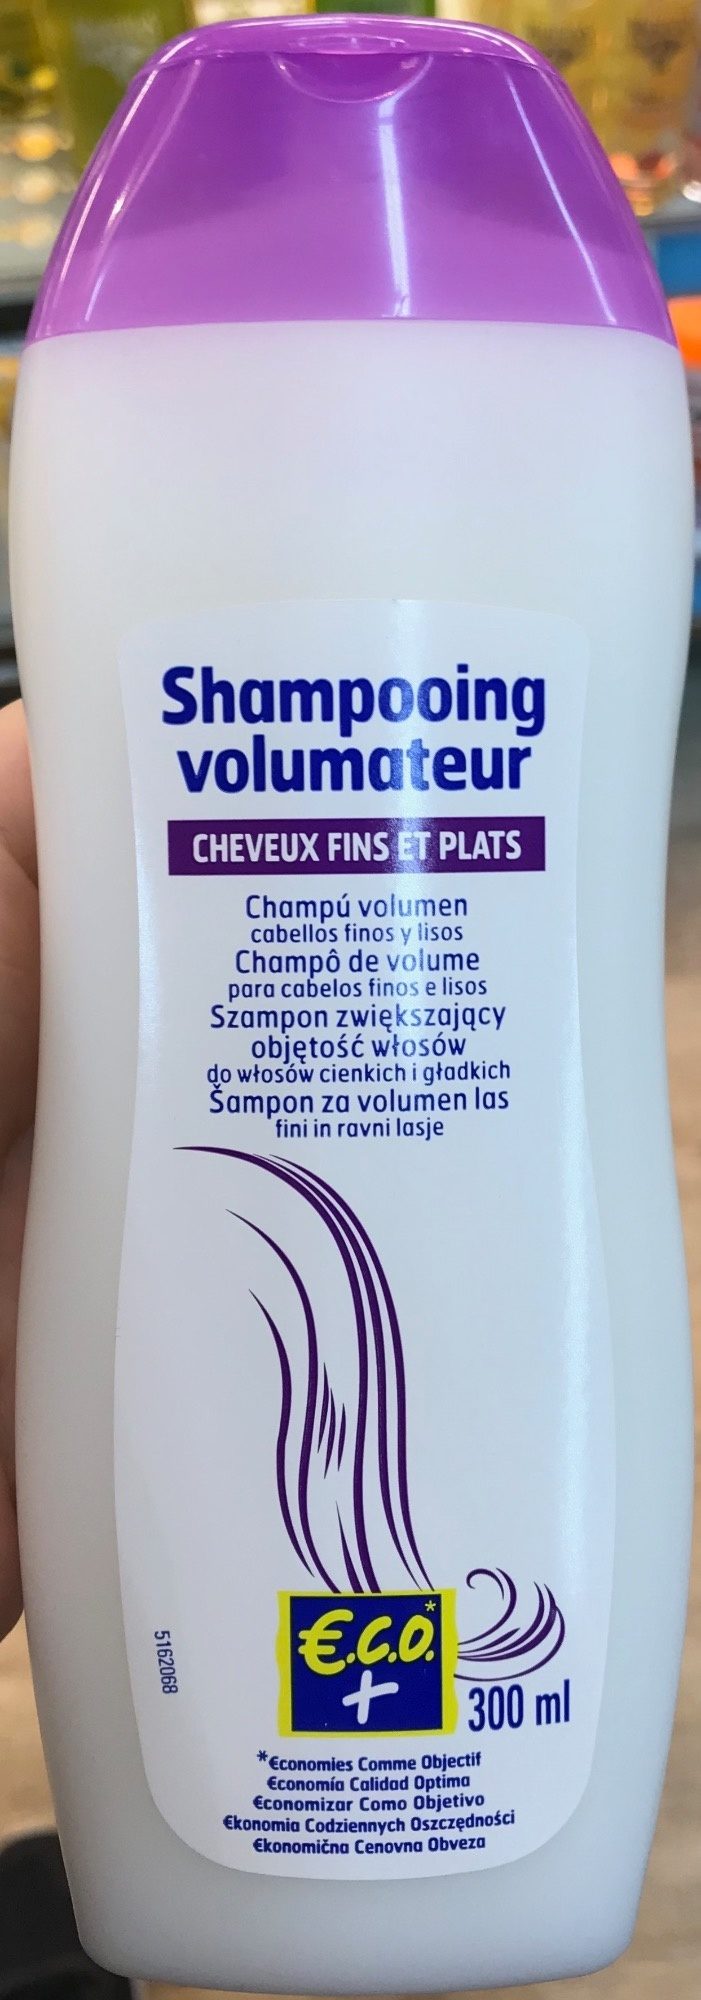 Shampooing volumateur - Product - fr